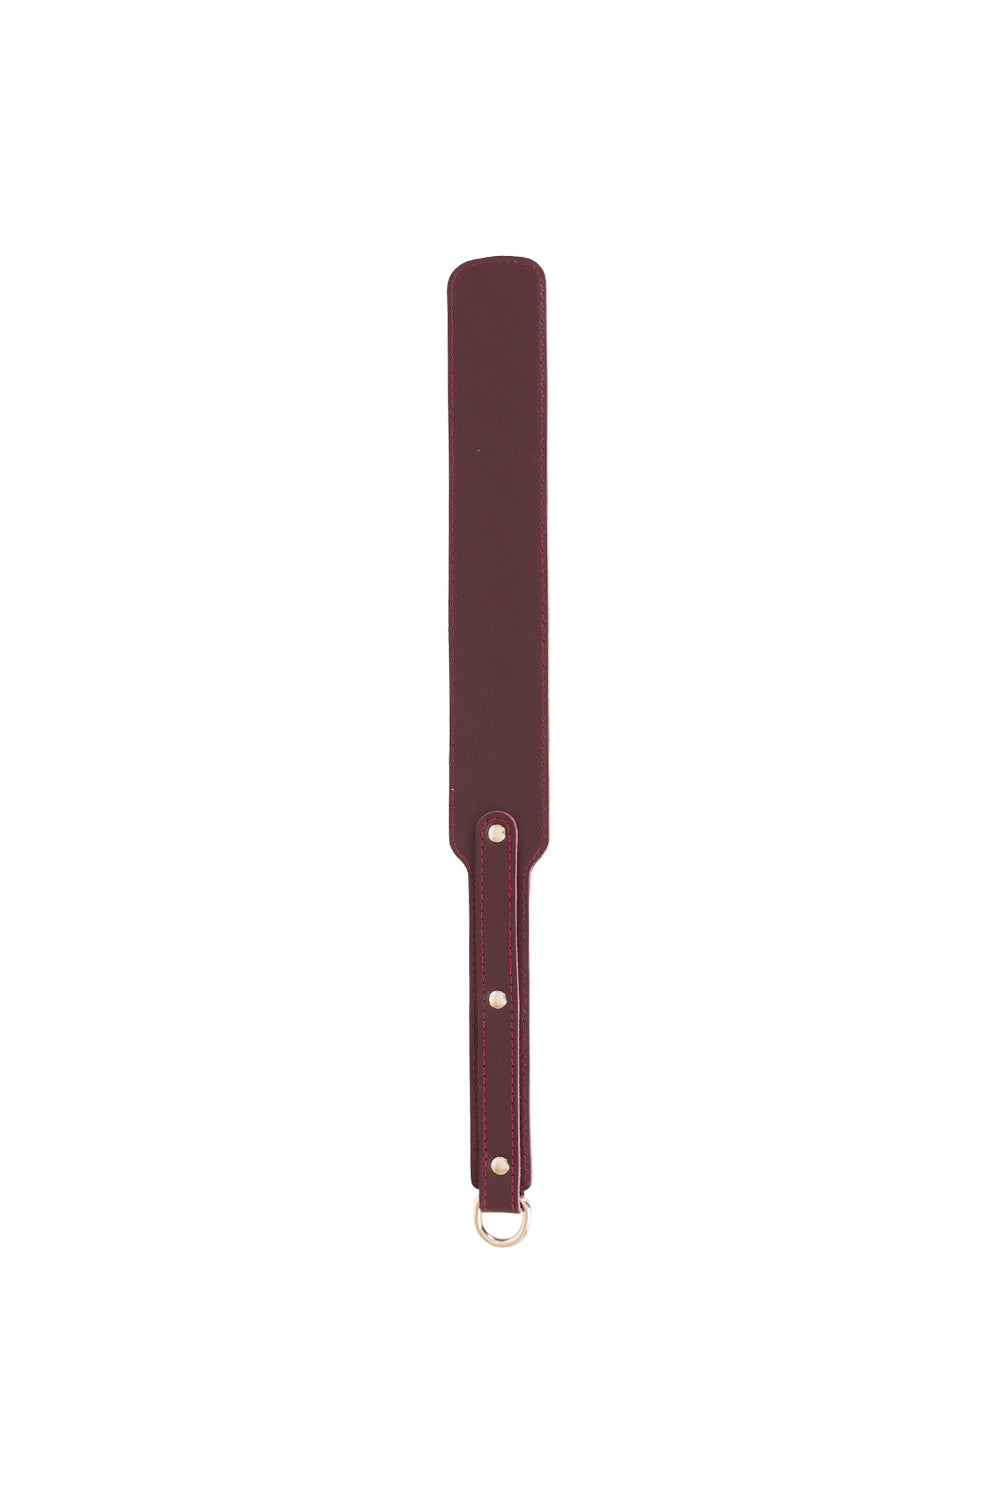 BDSM spanking paddle. Long size. 10 colors